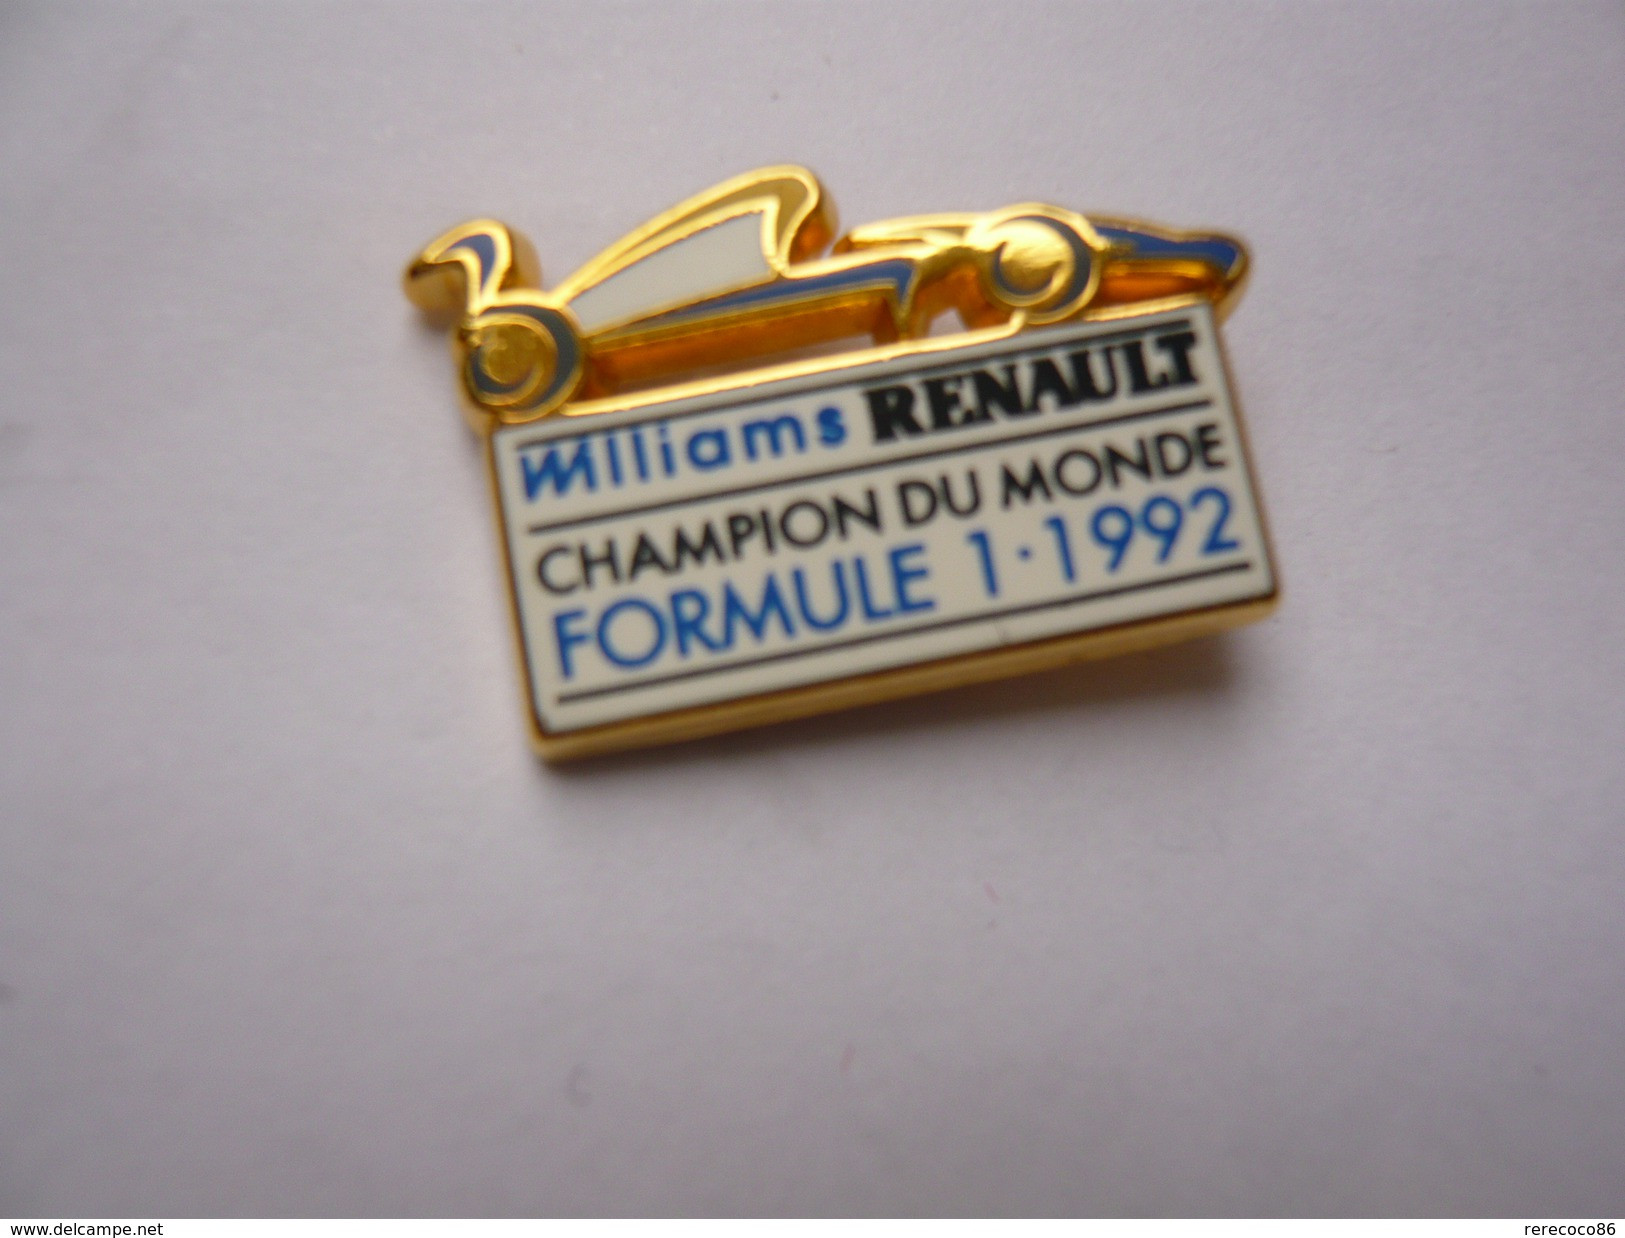 Pin S ARTHUS BERTRAND WILLIAMS RENAULT CHAMPION DU MONDE FORMULE 1 92 - Arthus Bertrand